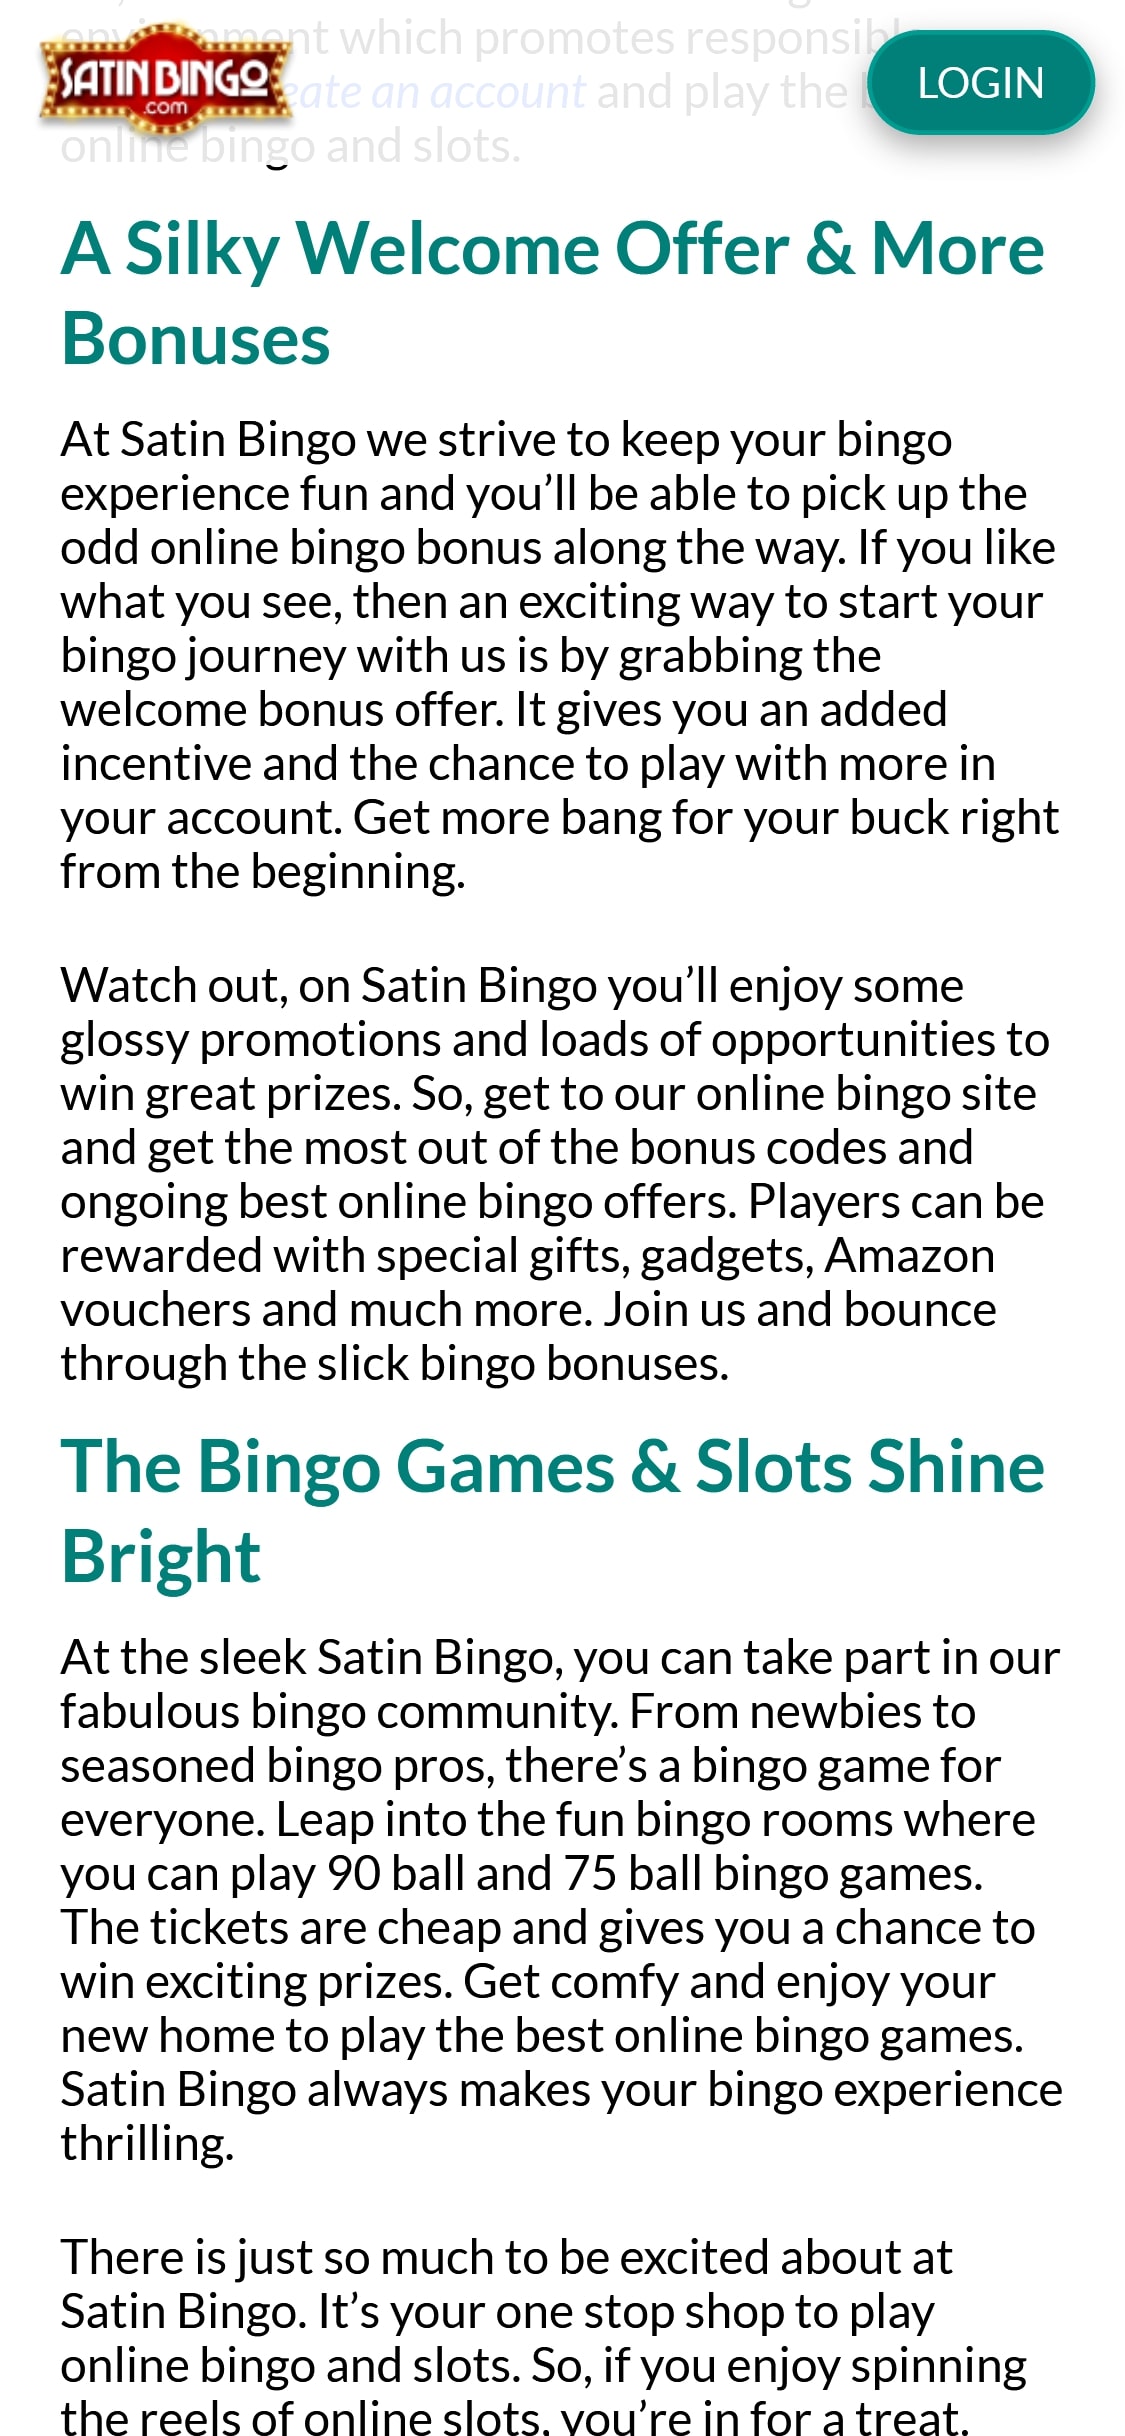 Satin Bingo Casino Mobile No Deposit Bonus Review